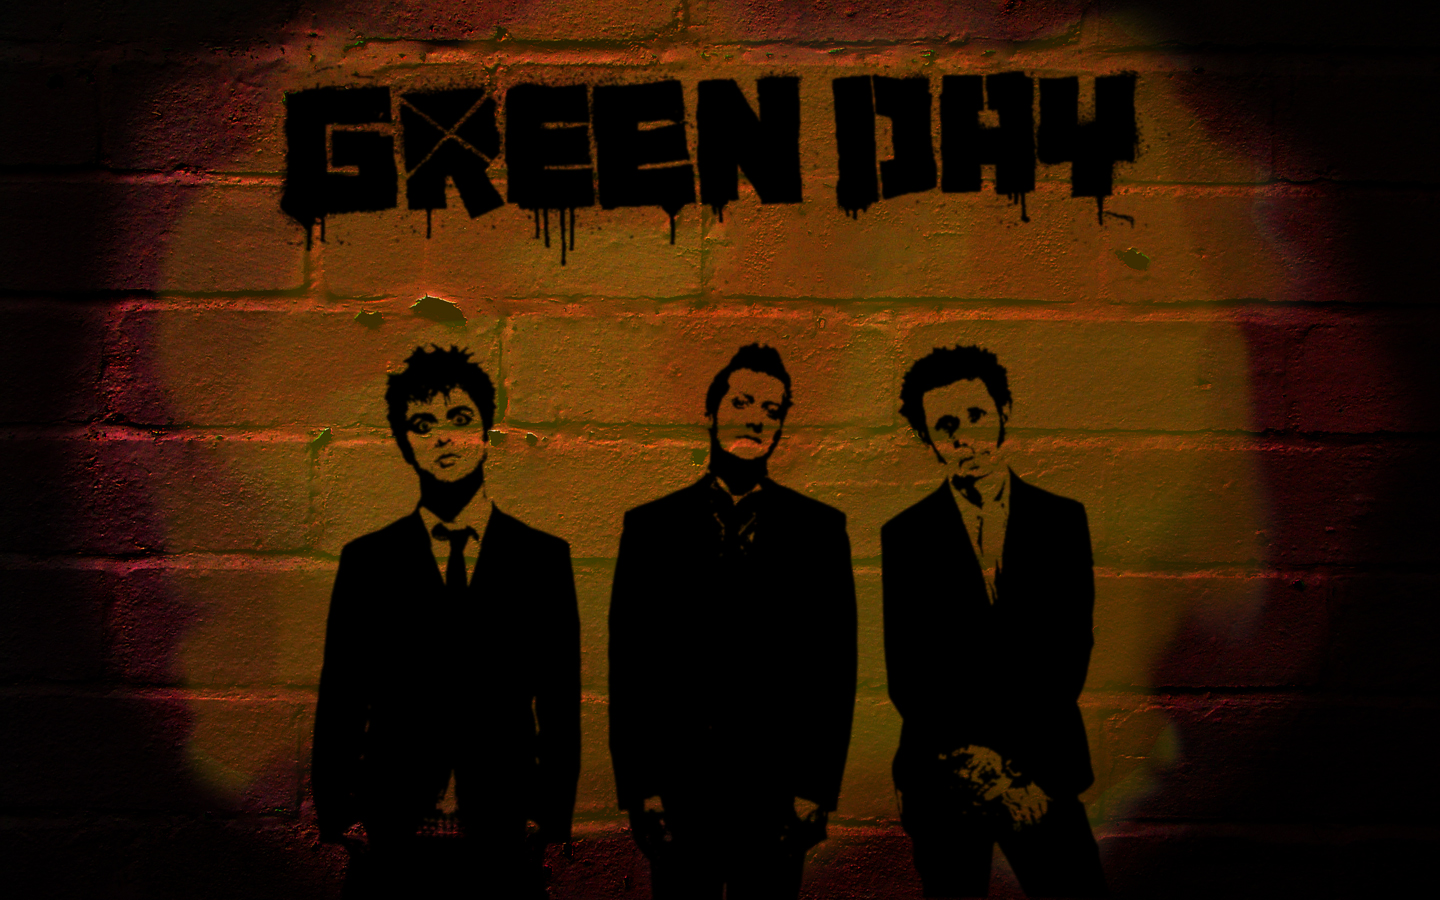 Green Day 21st Century Breakdown Backgrounds